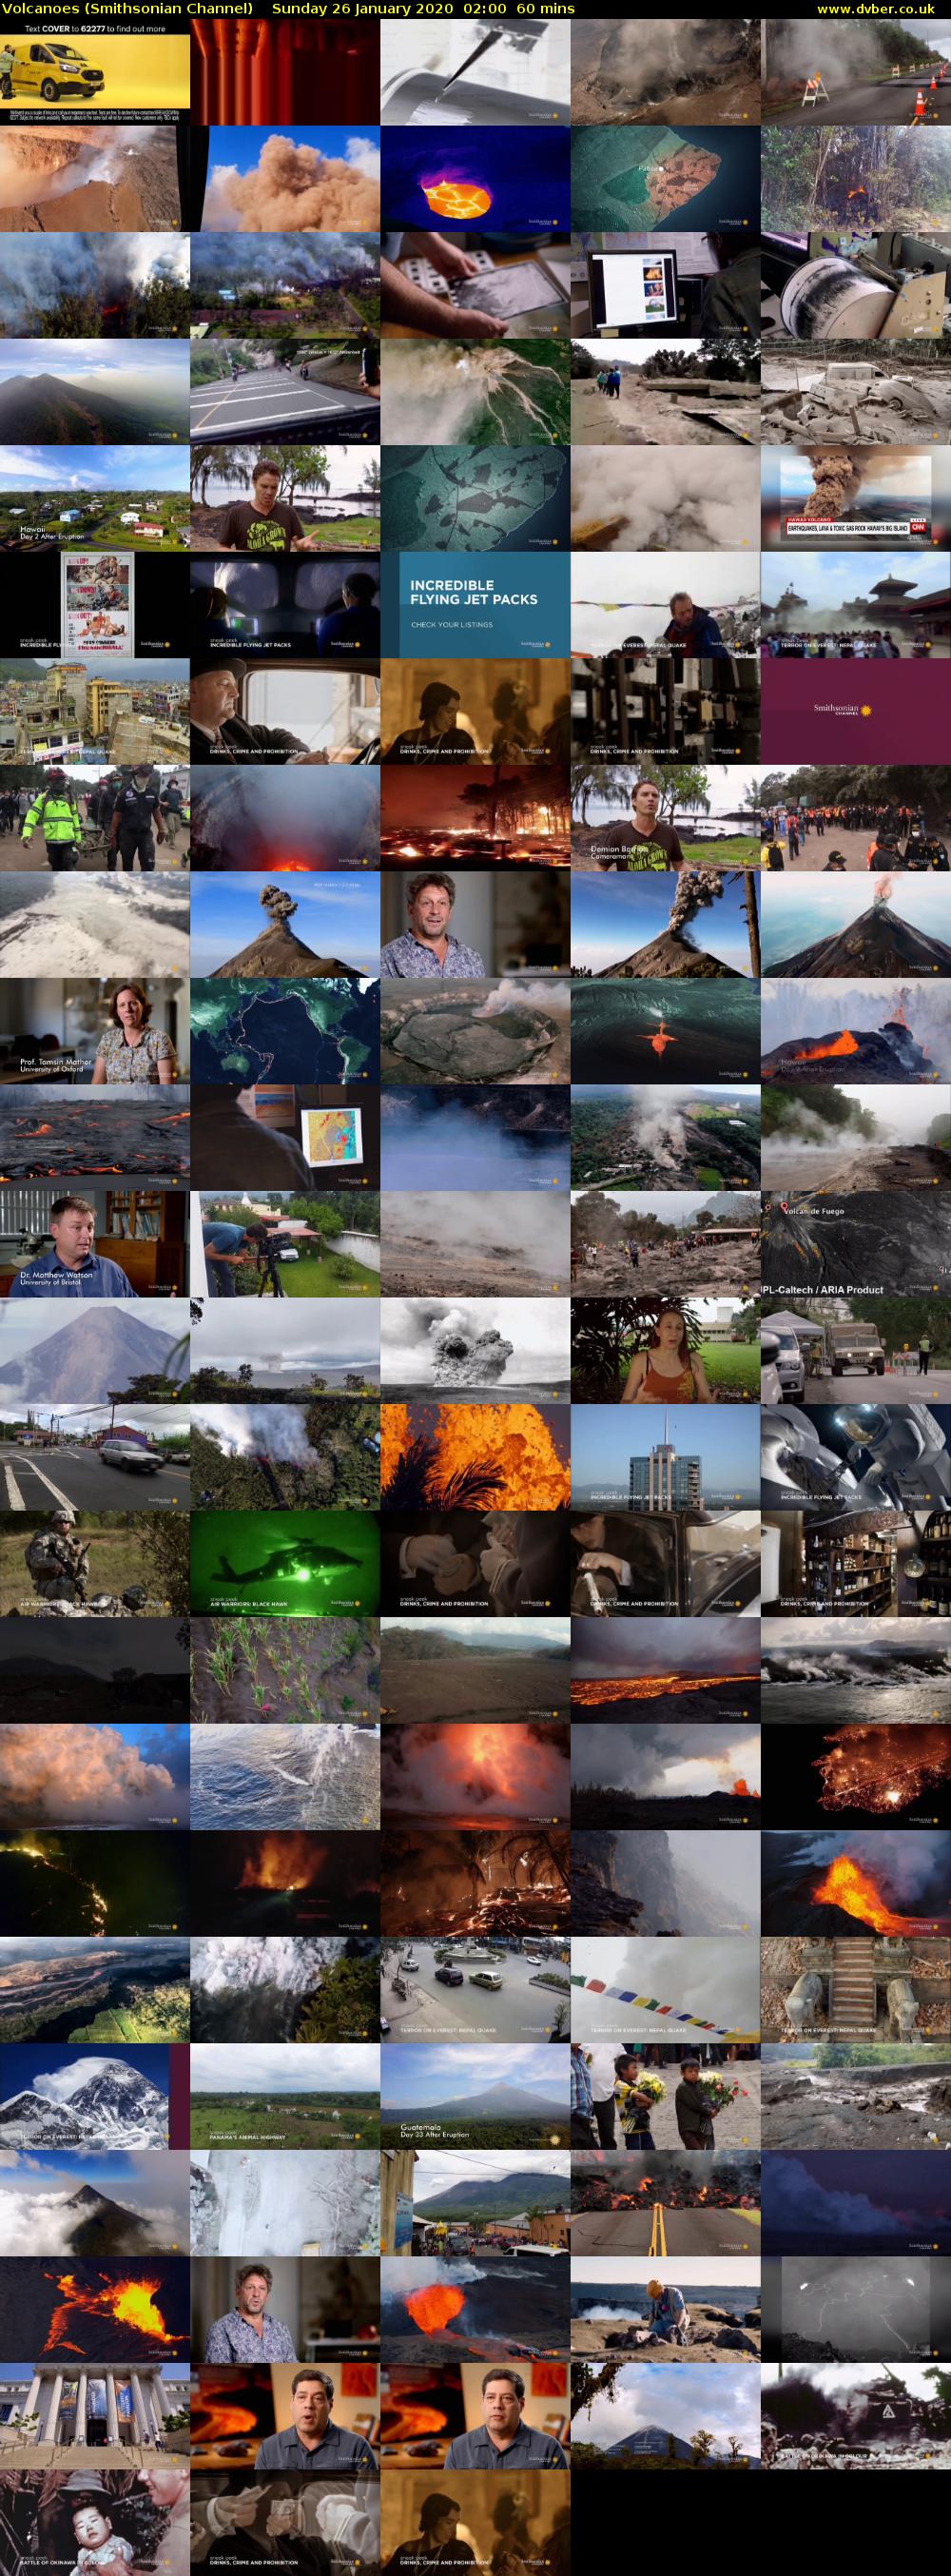 Volcanoes (Smithsonian Channel) Sunday 26 January 2020 02:00 - 03:00